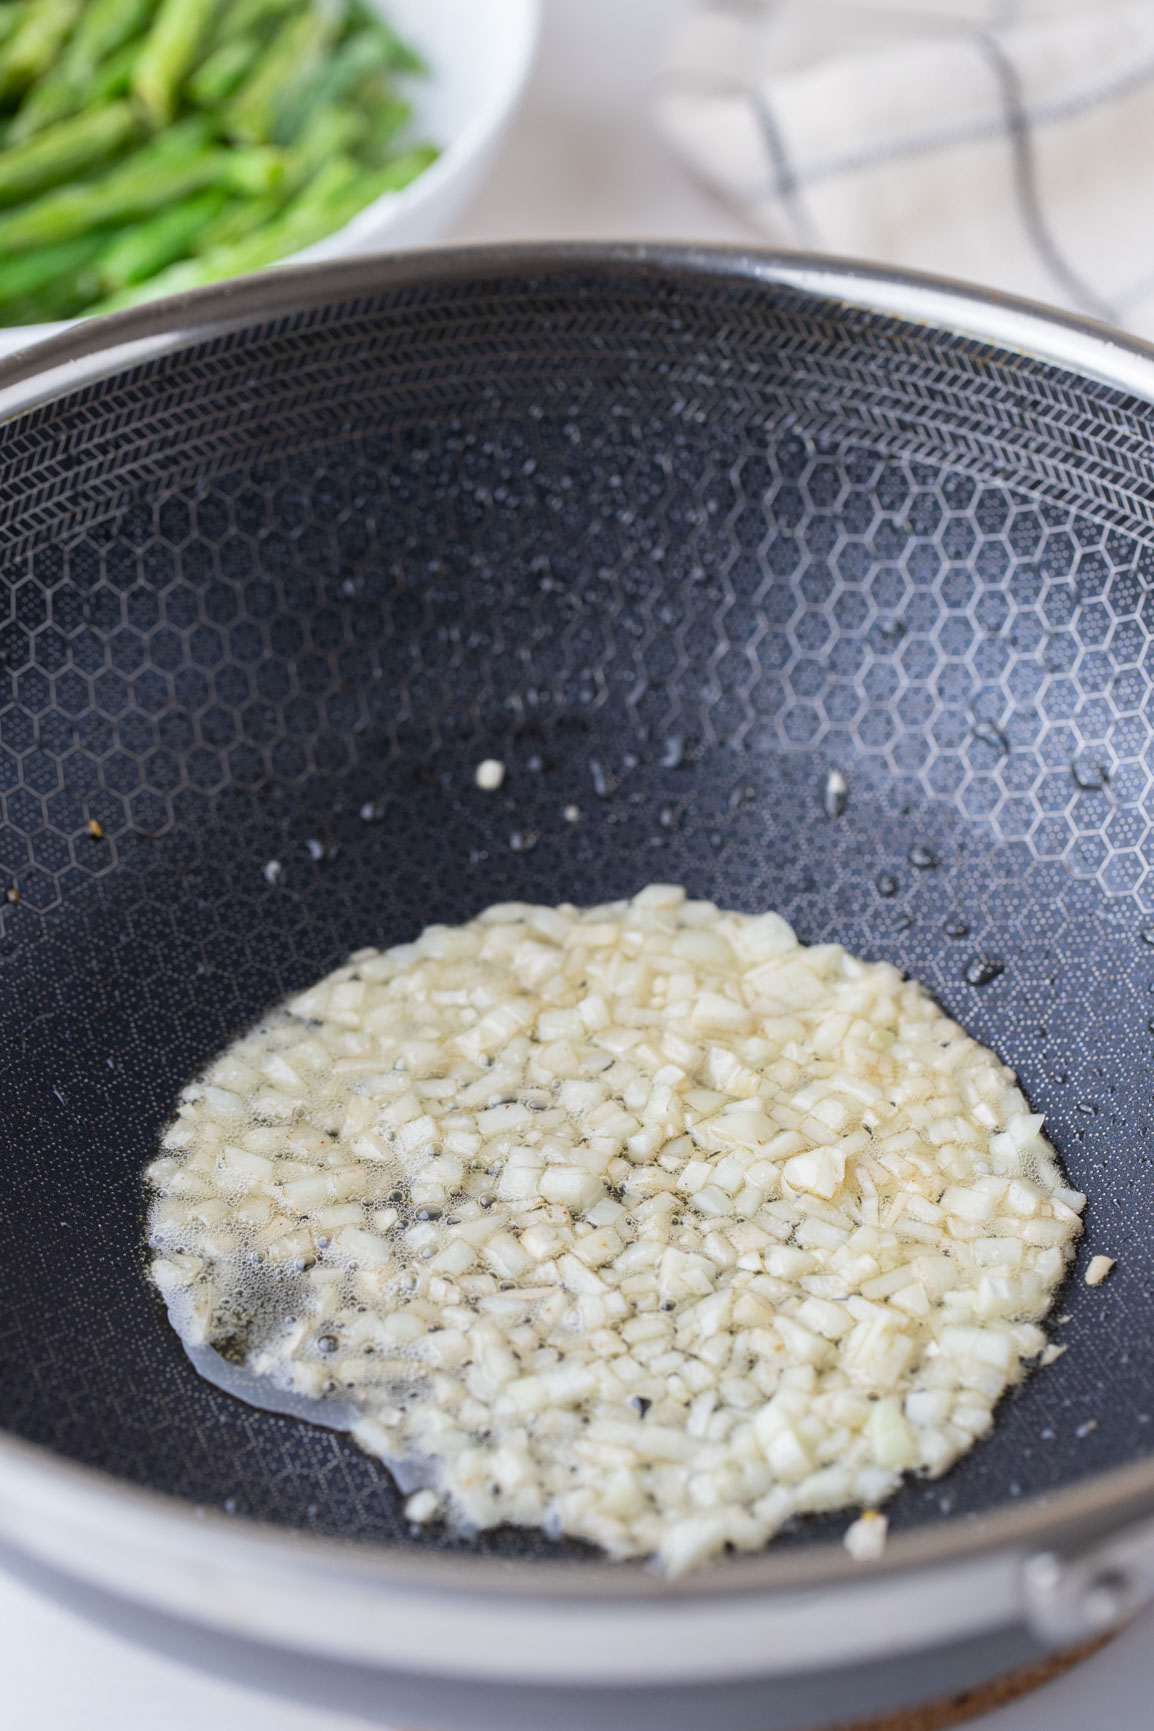 garlic sautéing in a pan